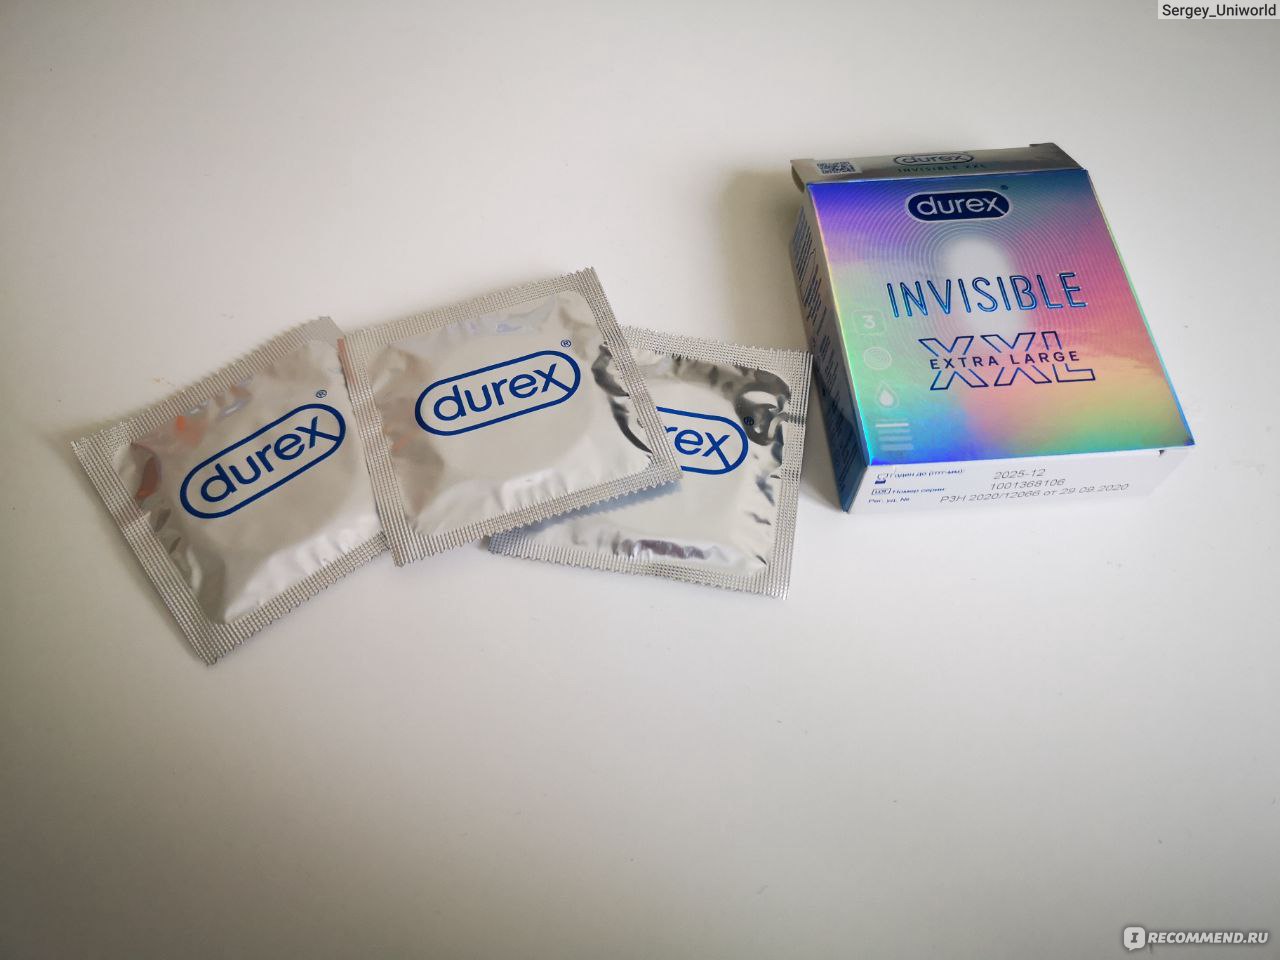 Вид презервативов в упаковке